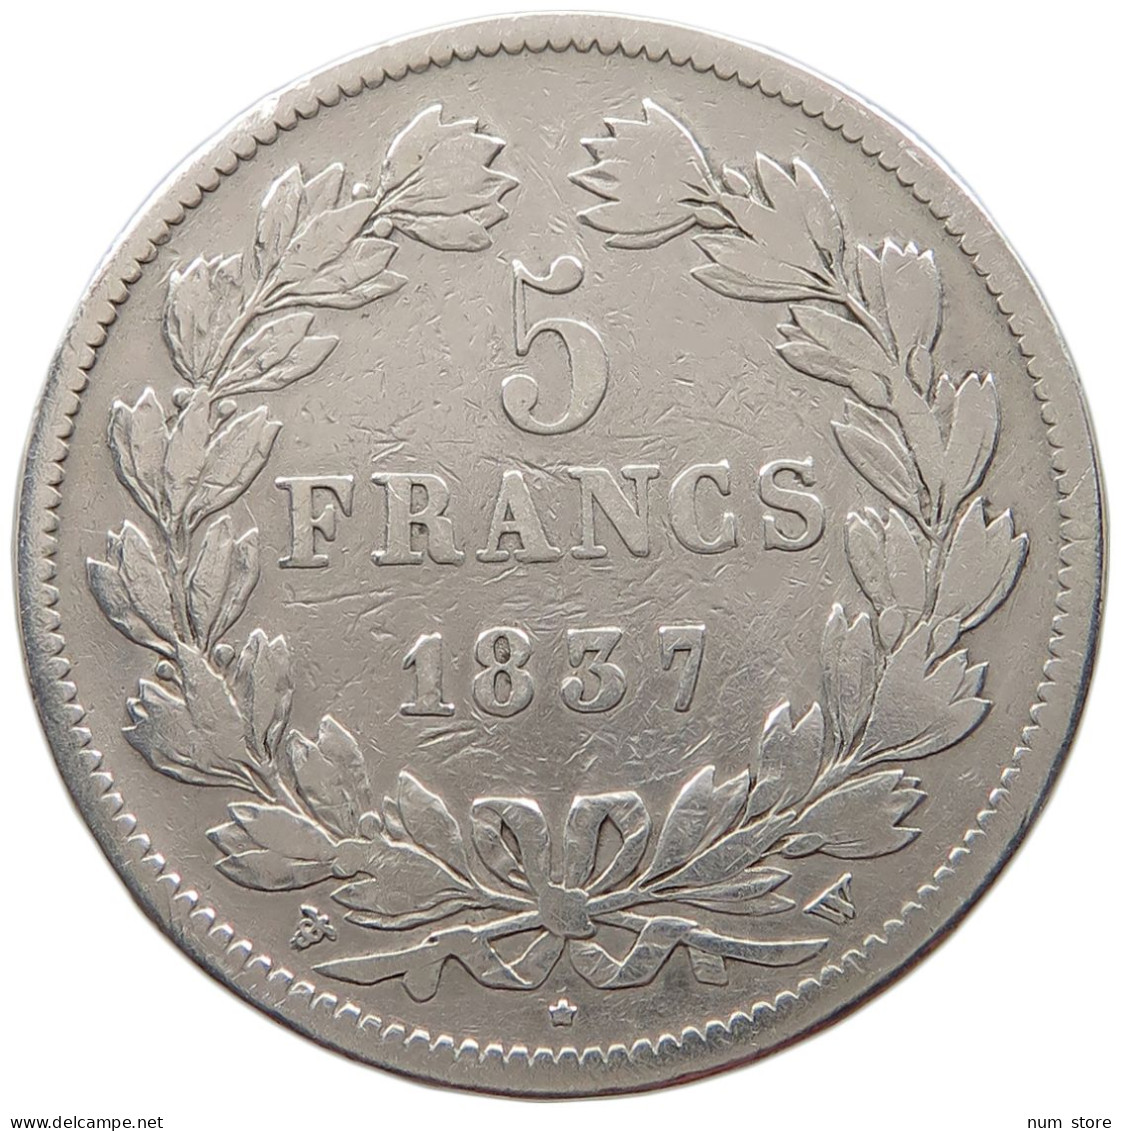 FRANCE 5 FRANCS 1837 W LOUIS PHILIPPE I. (1830-1848) #a001 0117 - 5 Francs